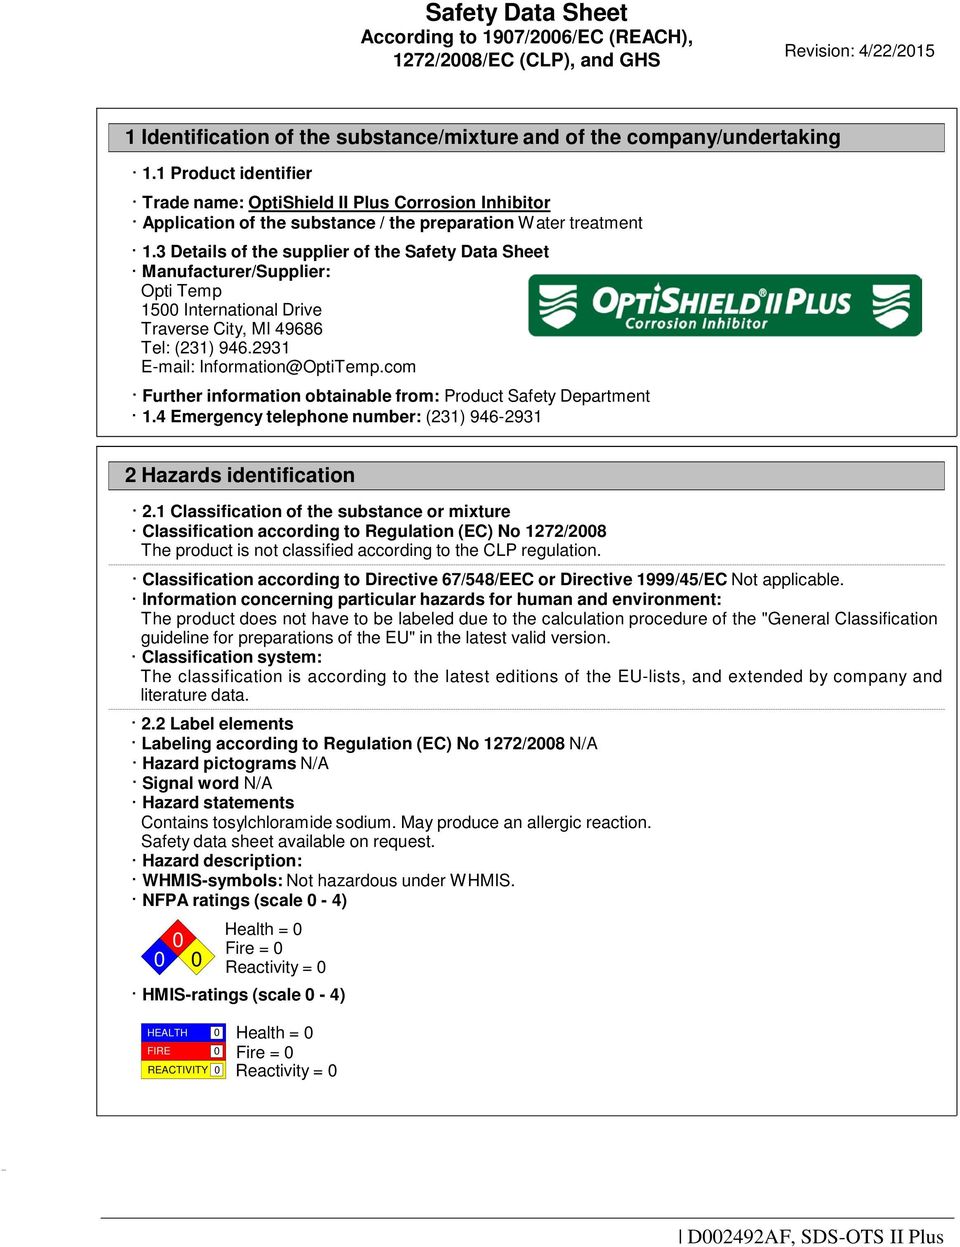 3 Details of the supplier of the Manufacturer/Supplier: Opti Temp 1500 International Drive Traverse City, MI 49686 Tel: (231) 946.2931 E-mail: Information@OptiTemp.